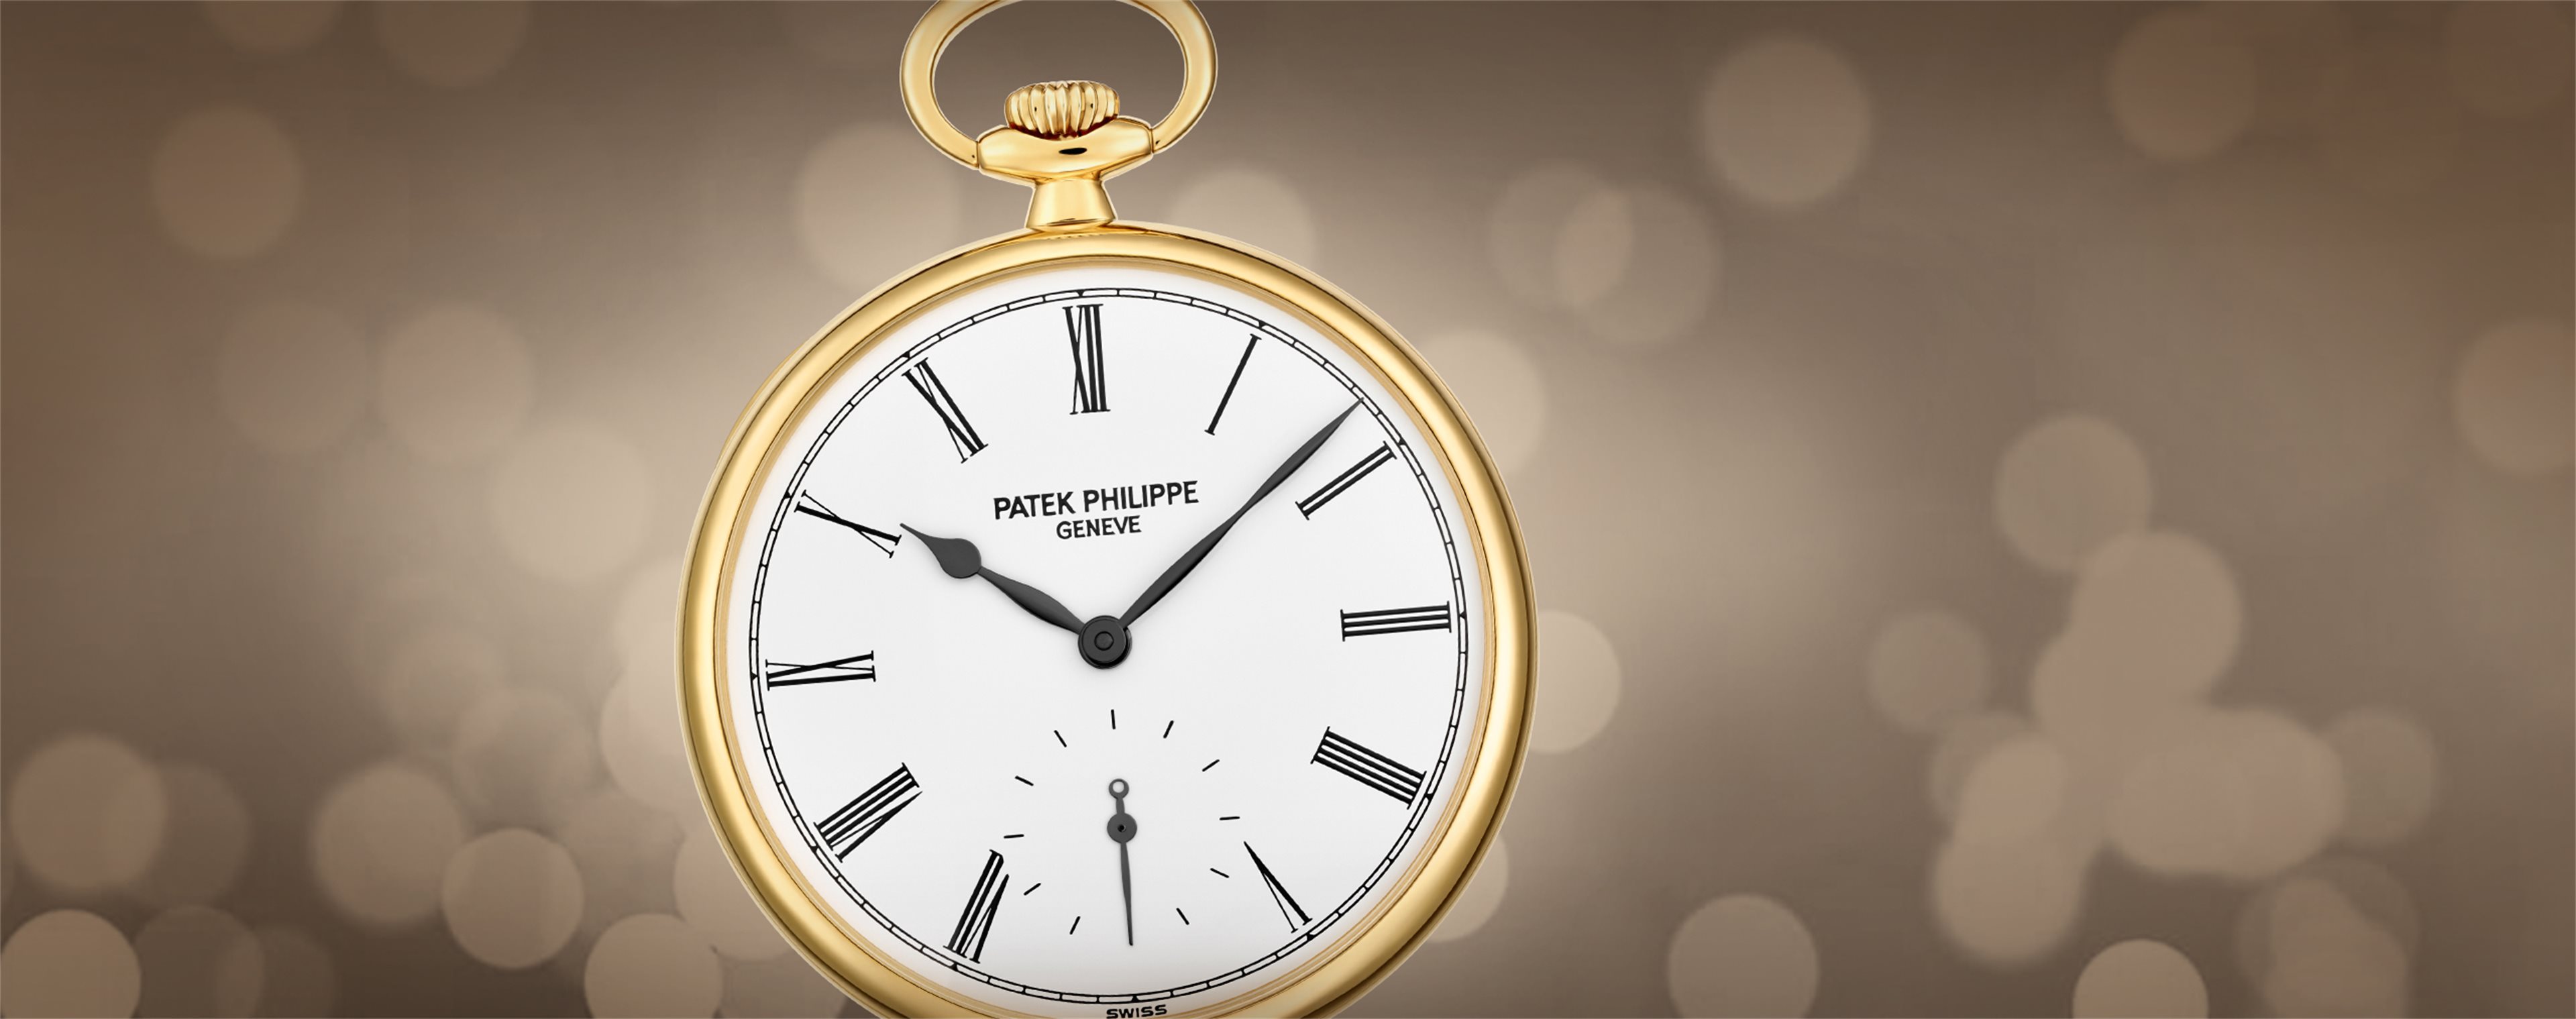 Patek Philippe Nautilus 5980/1A 40mm Blue Dial Chronograph Watch